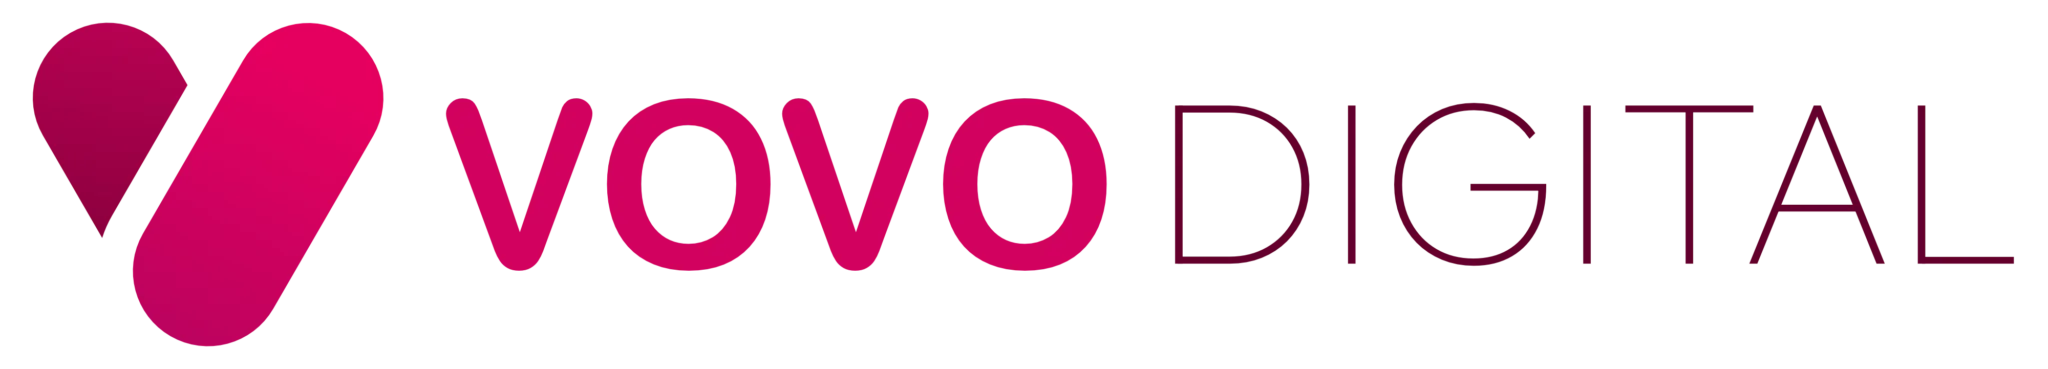 Long-form version of the VOVO Digital logo.